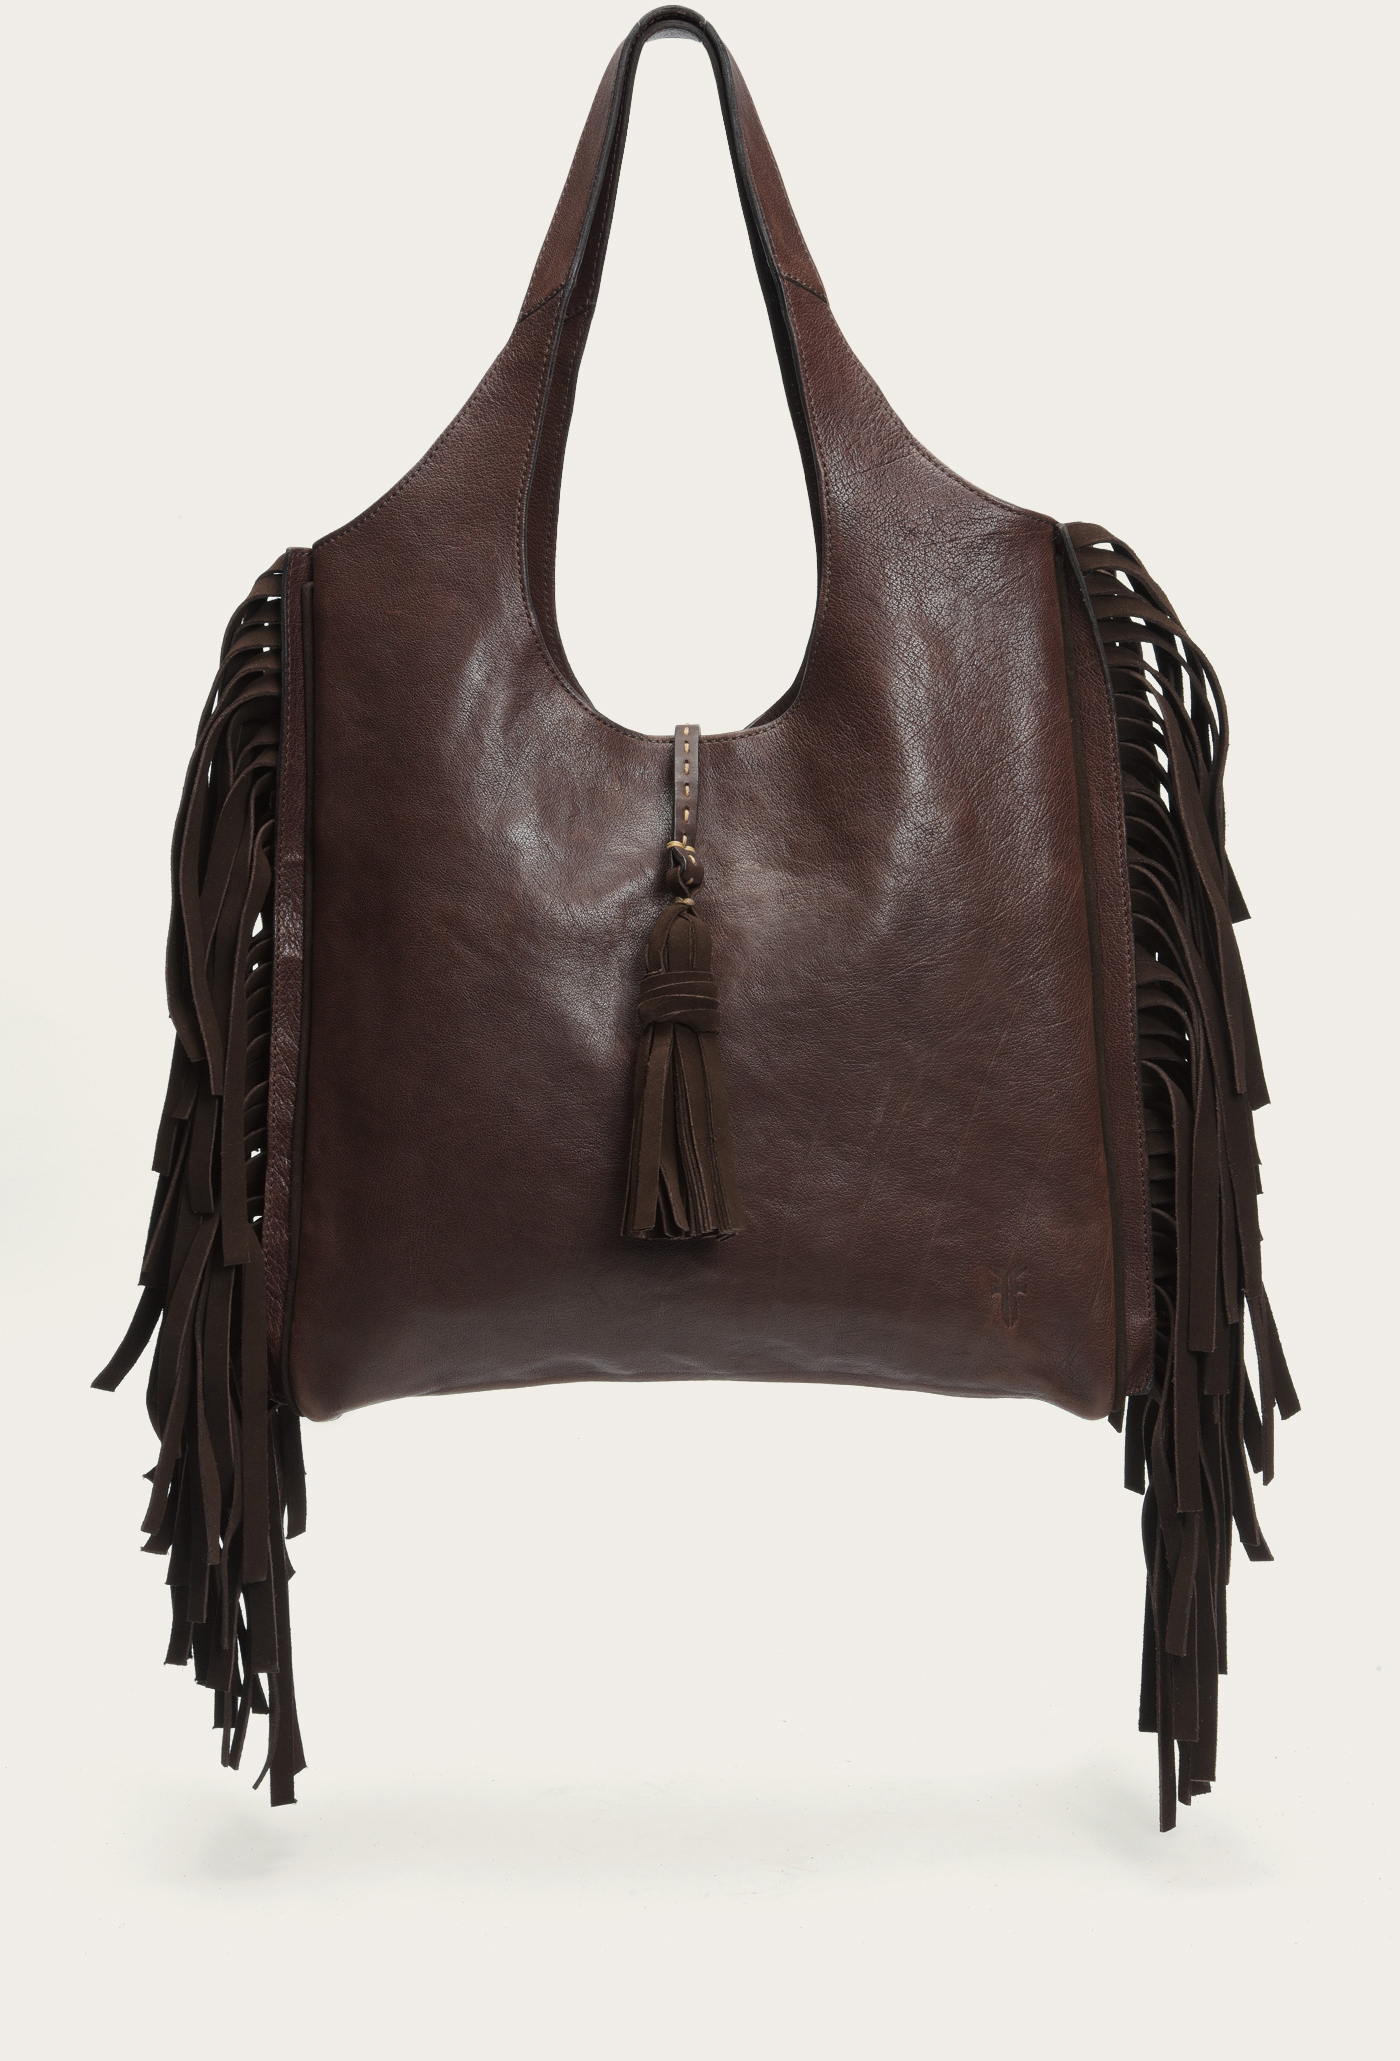 Frye Farrah Fringe Leather Hobo Bag in Brown - Lyst